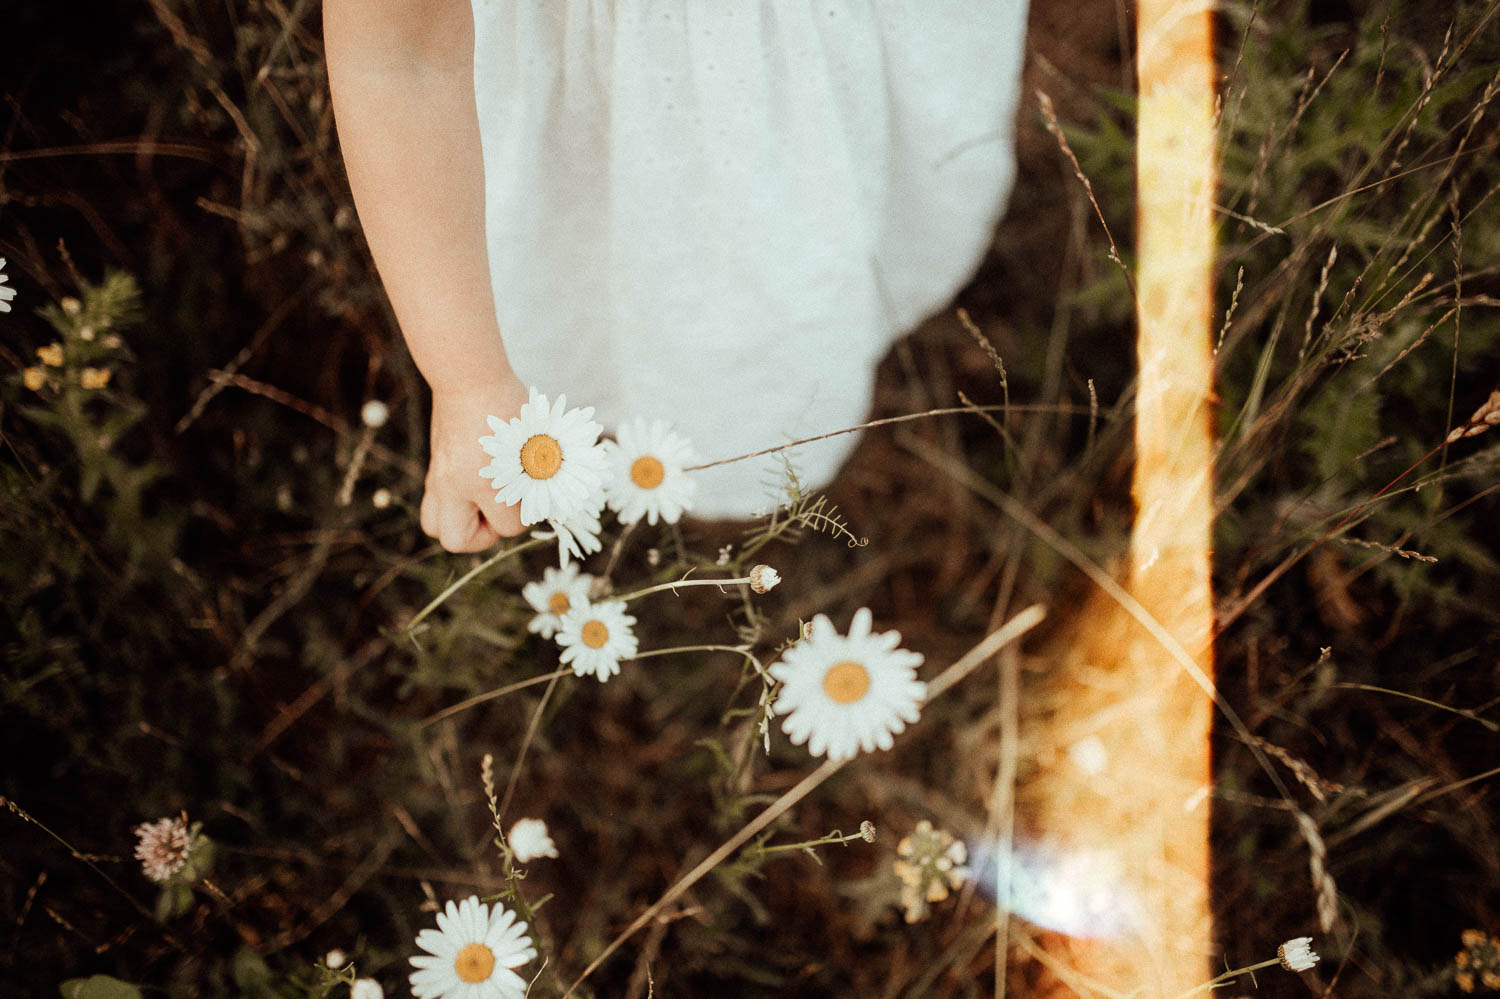 Little girl touching daisies